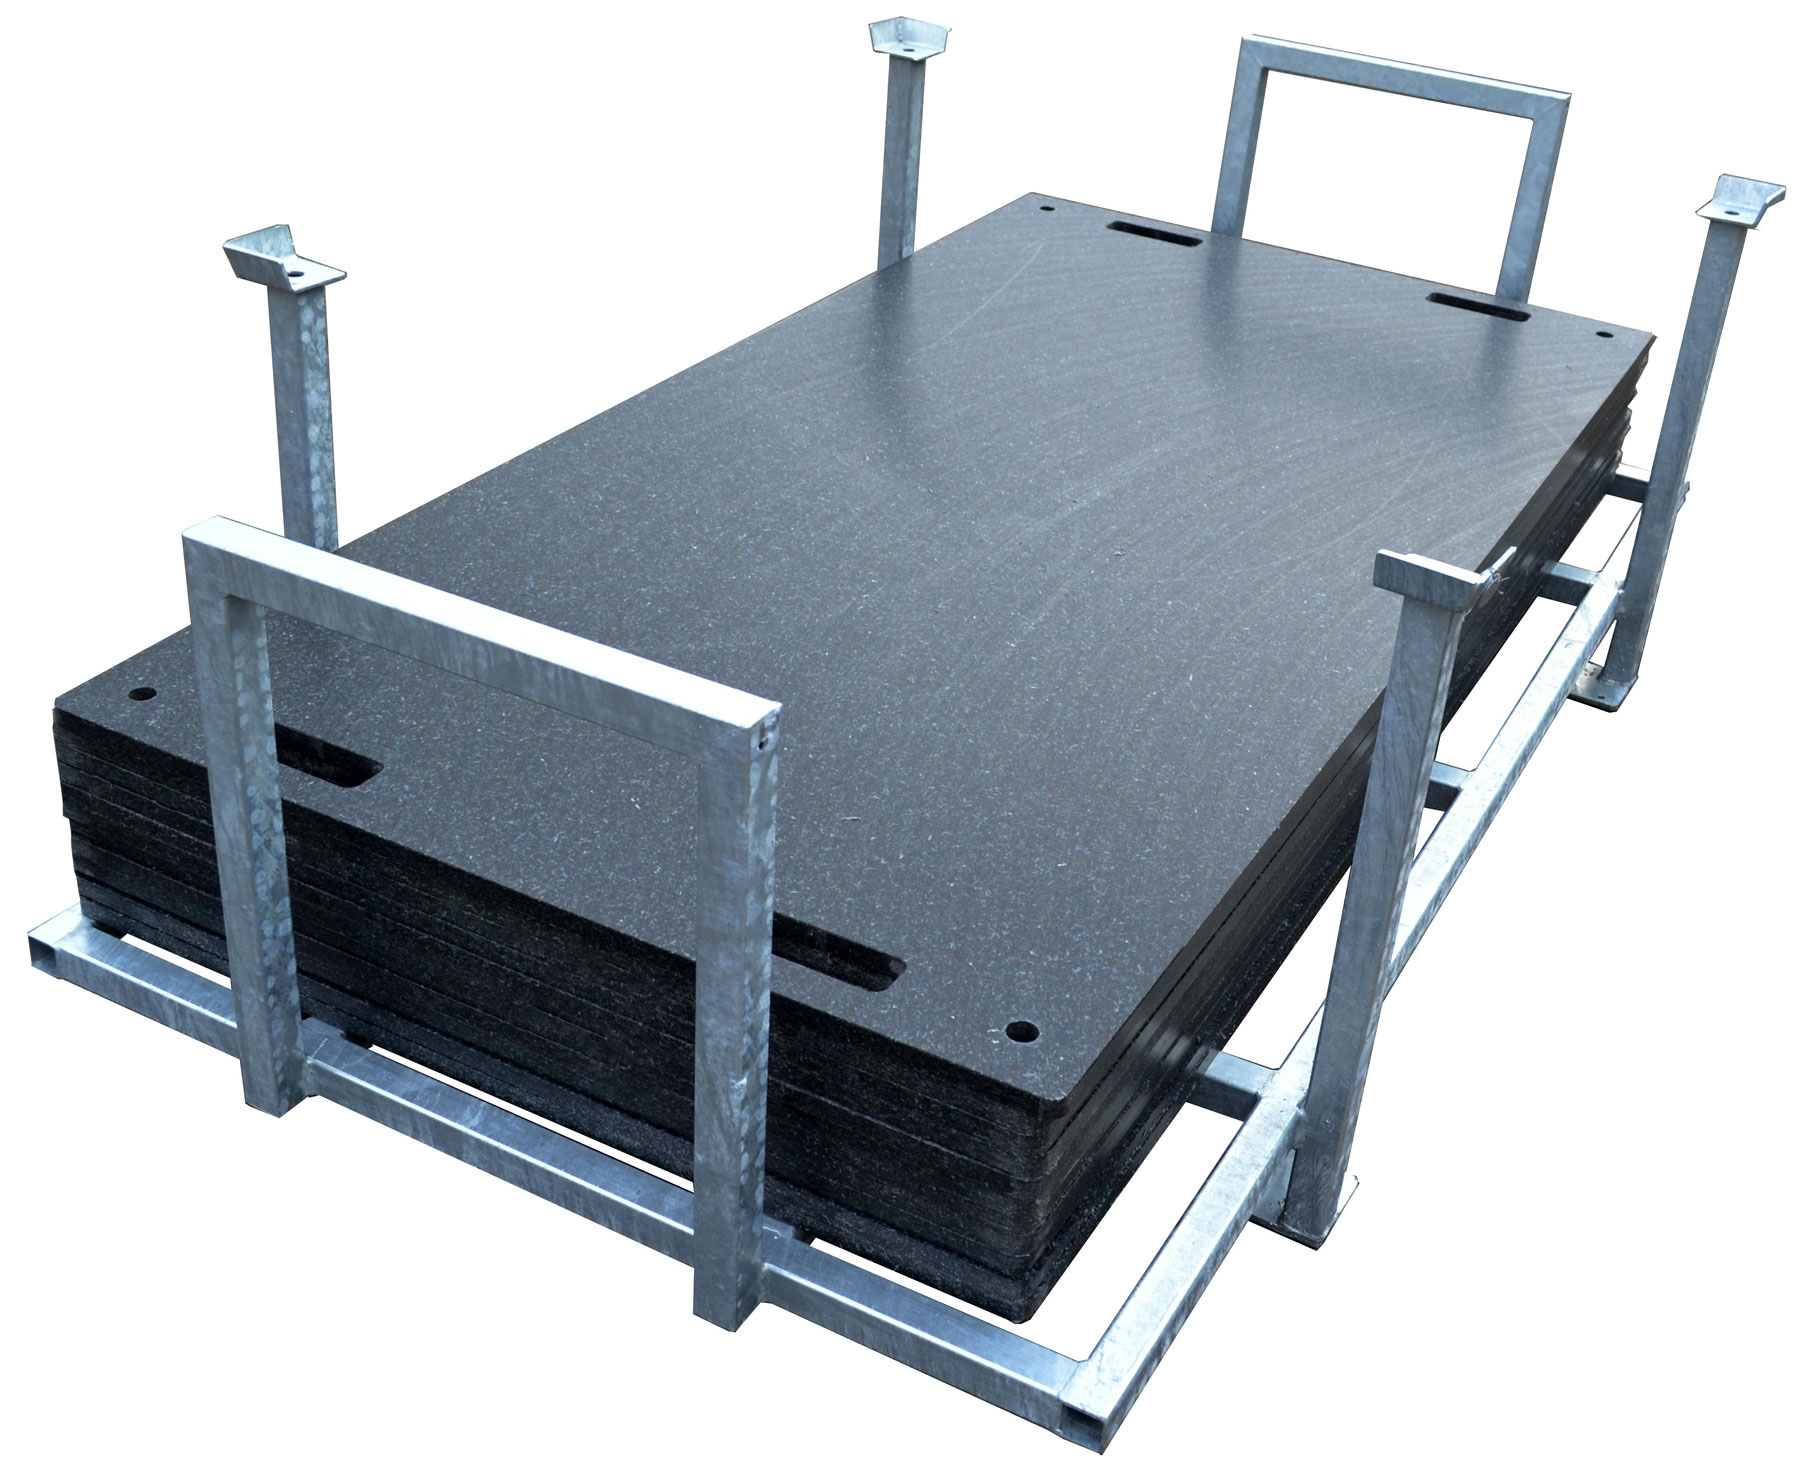 LuxTek Fahrplatten-Set Performance Komplett-Set mit Bodenschutzplatte 2000 x 1000 mm | Transportbox | Verbindungsklammern (LU-C-FPSet1510R) Bild-01